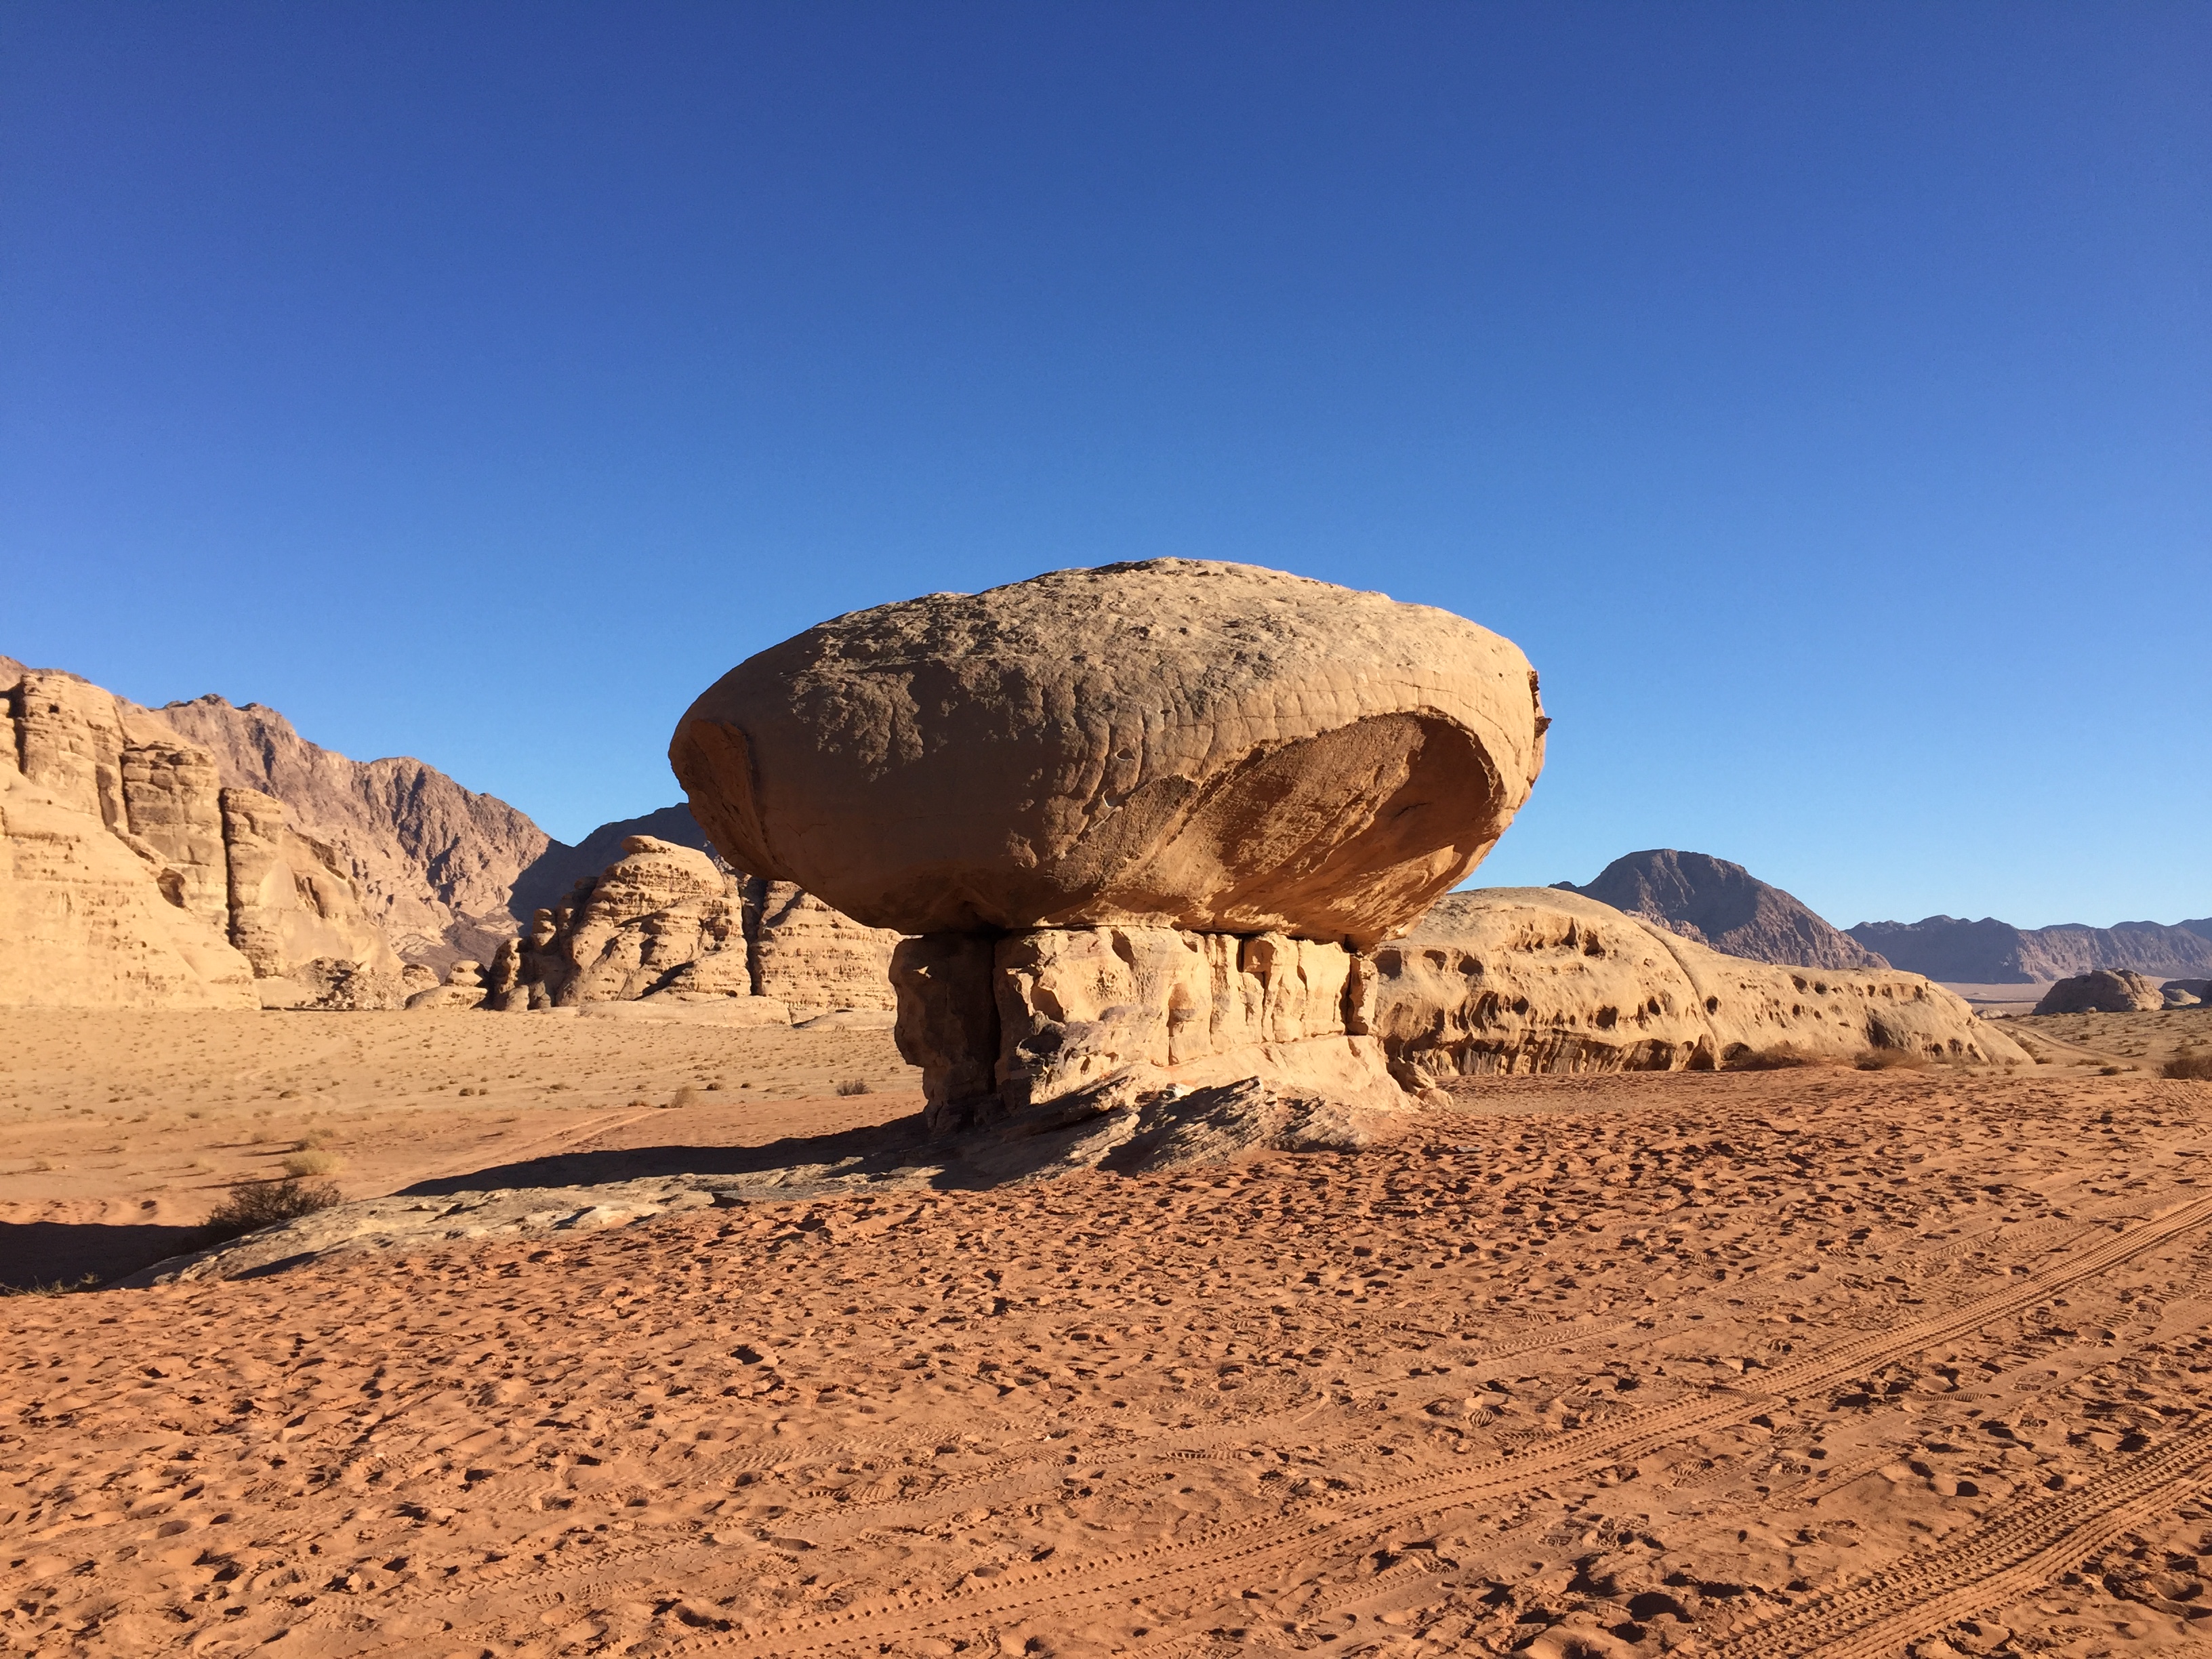 A surreal rock-shaped tree